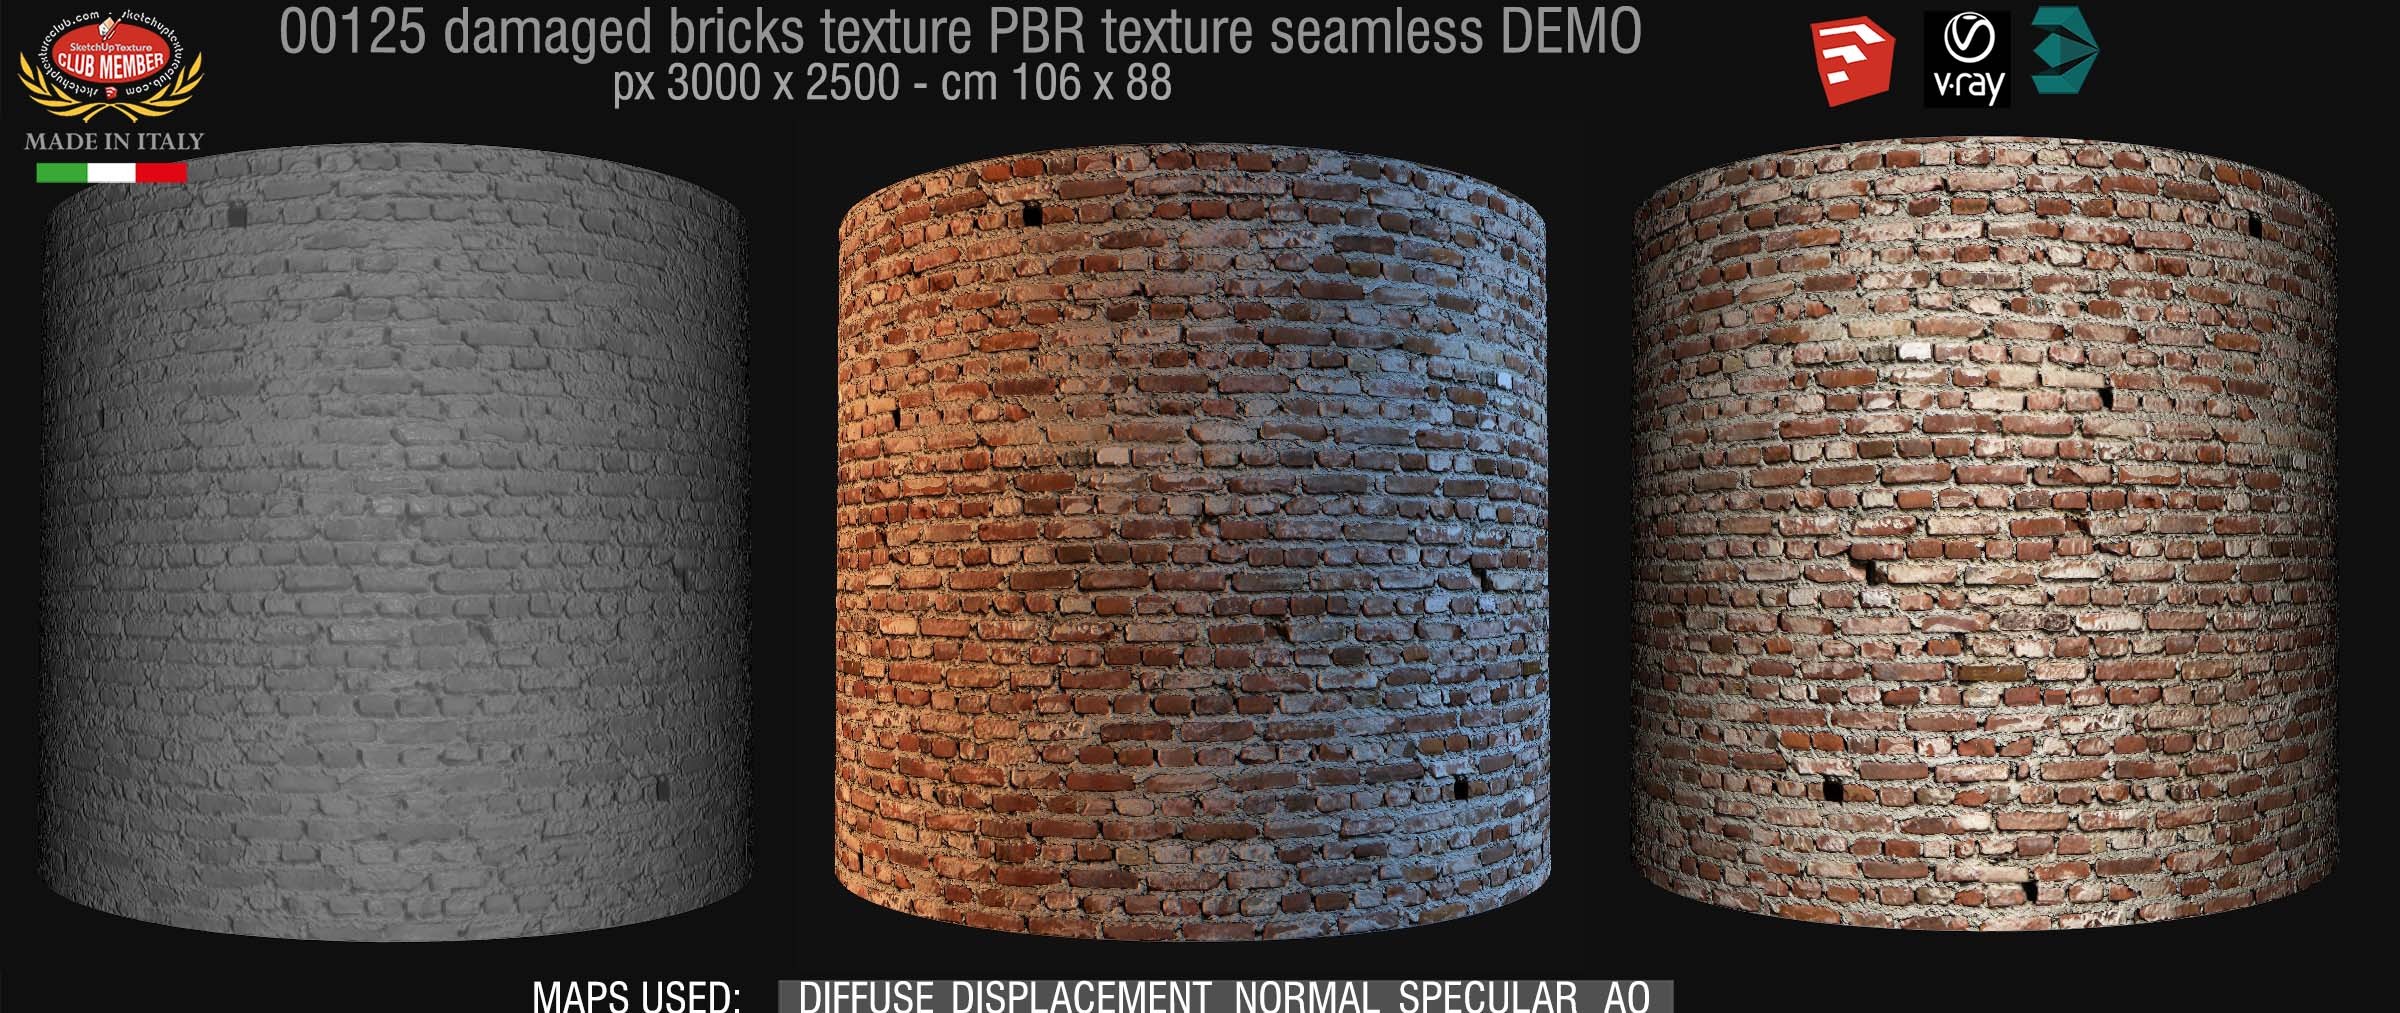 00125 Damaged bricks PBR texture seamless DEMO